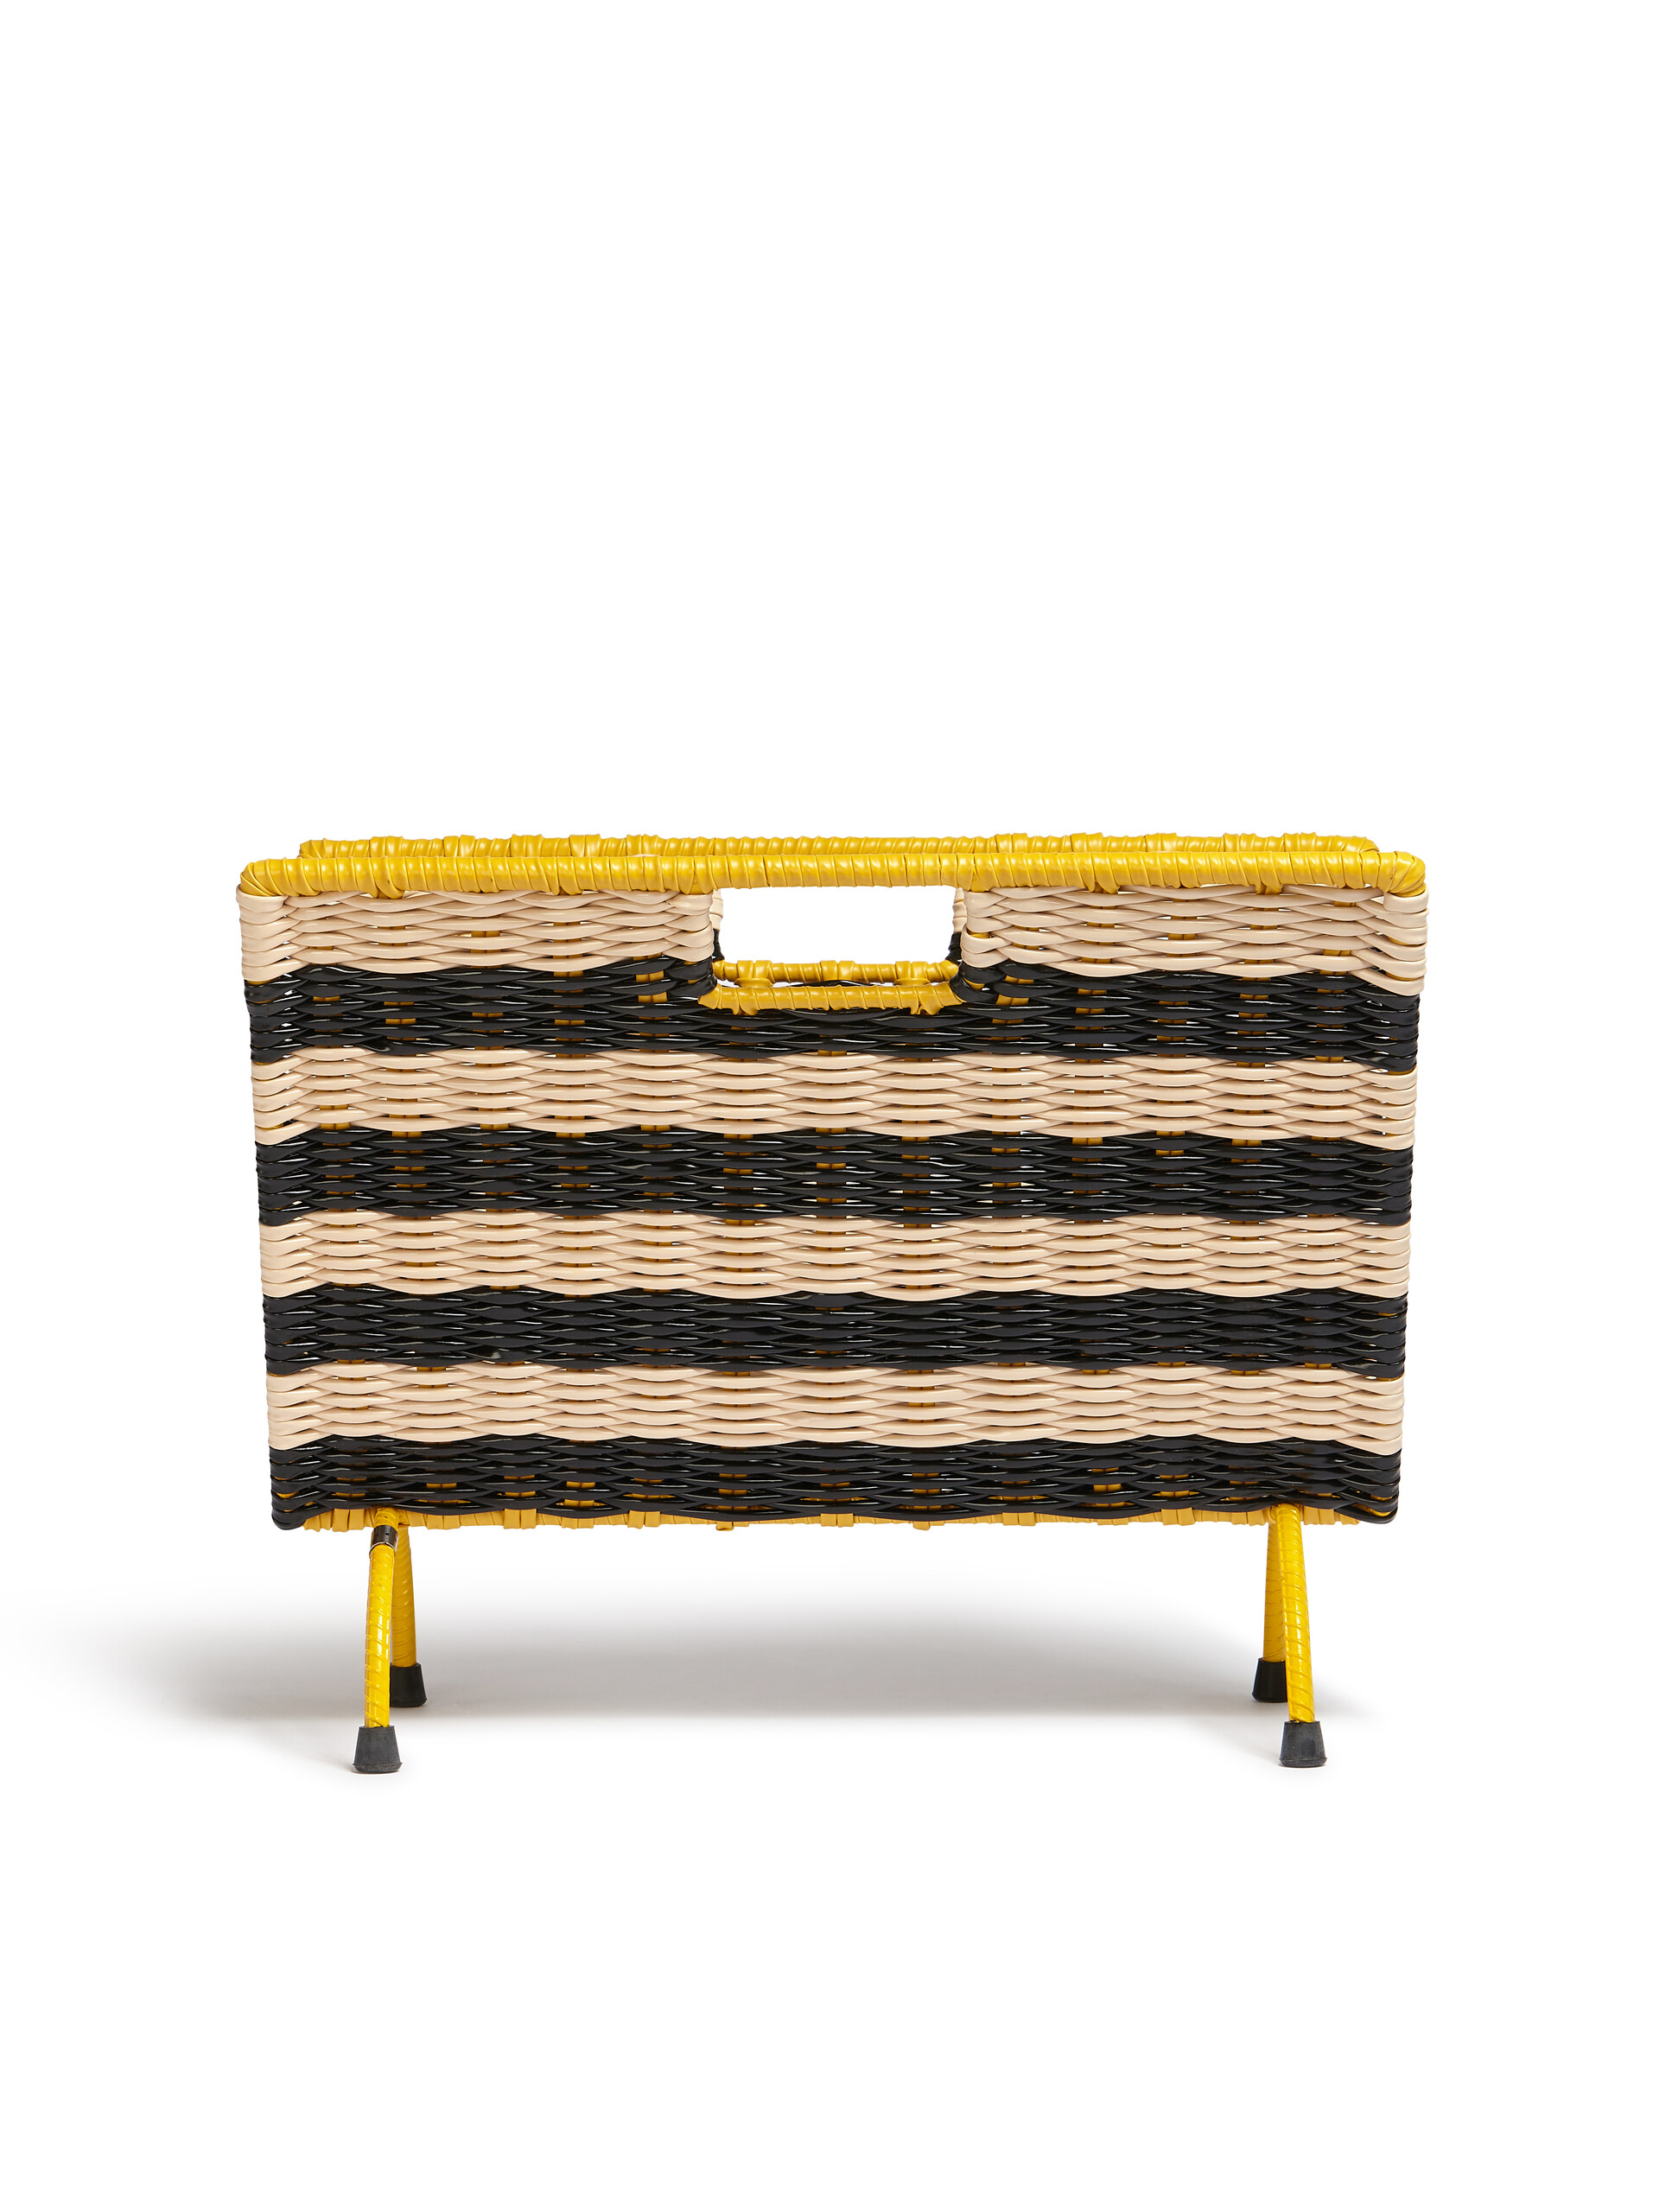 MARNI MARKET beige and black magazine rack - Furniture - Image 3